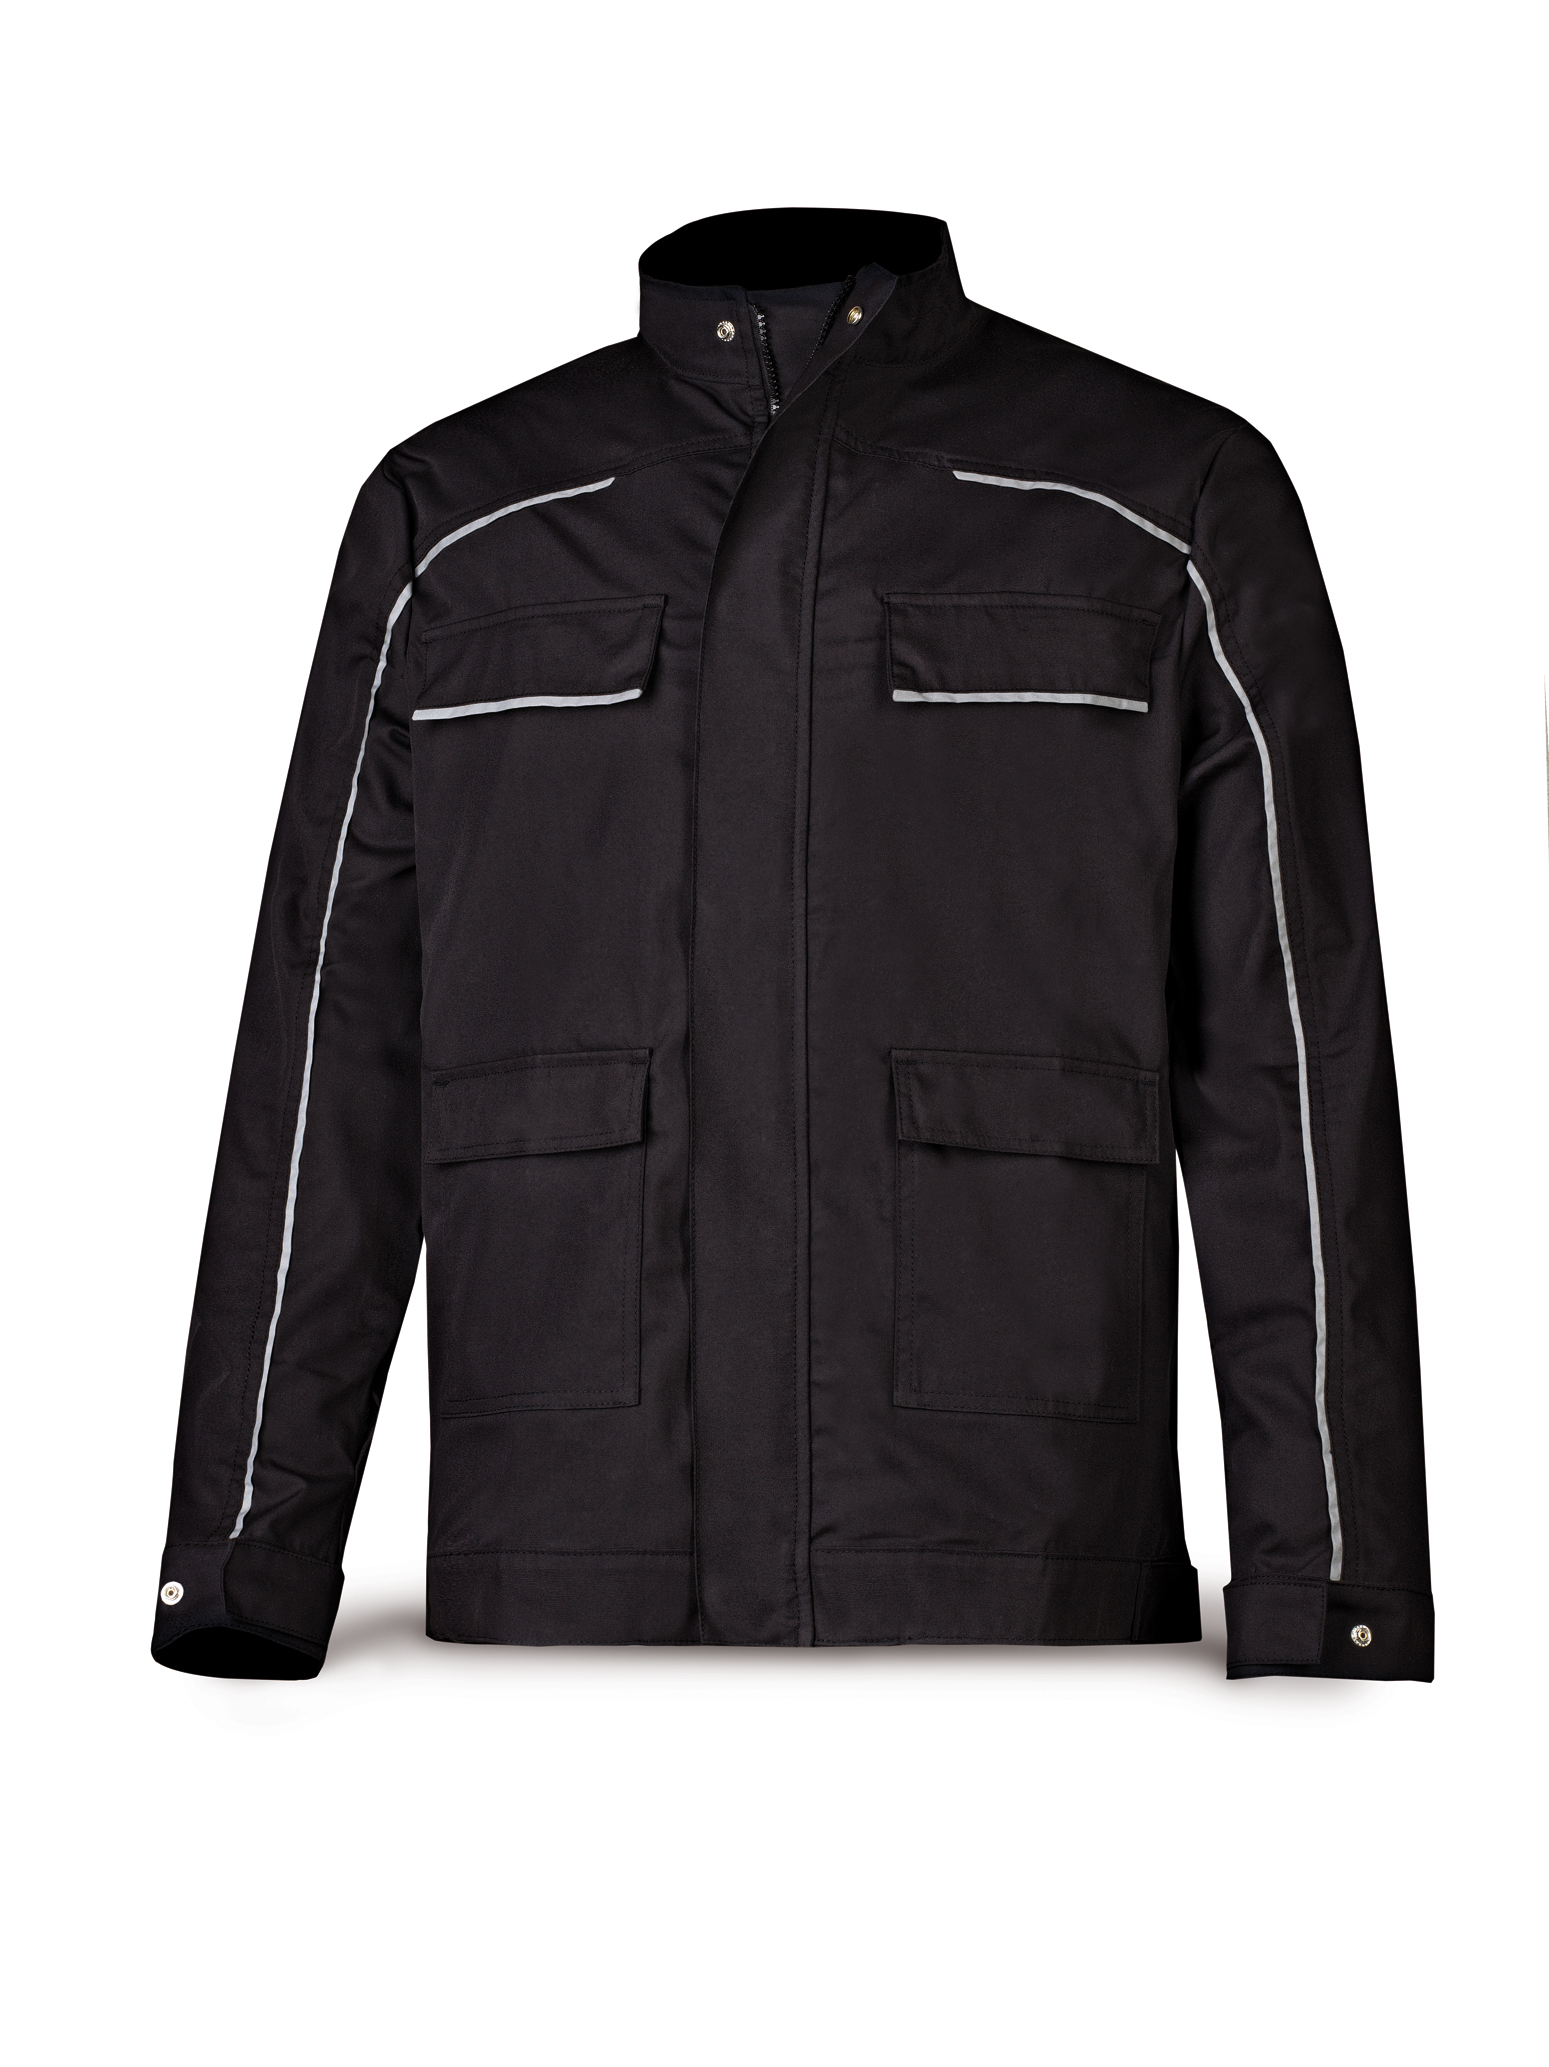 588-CN Workwear Pro Series Tergal 245gr. Canvas jacket. Black.